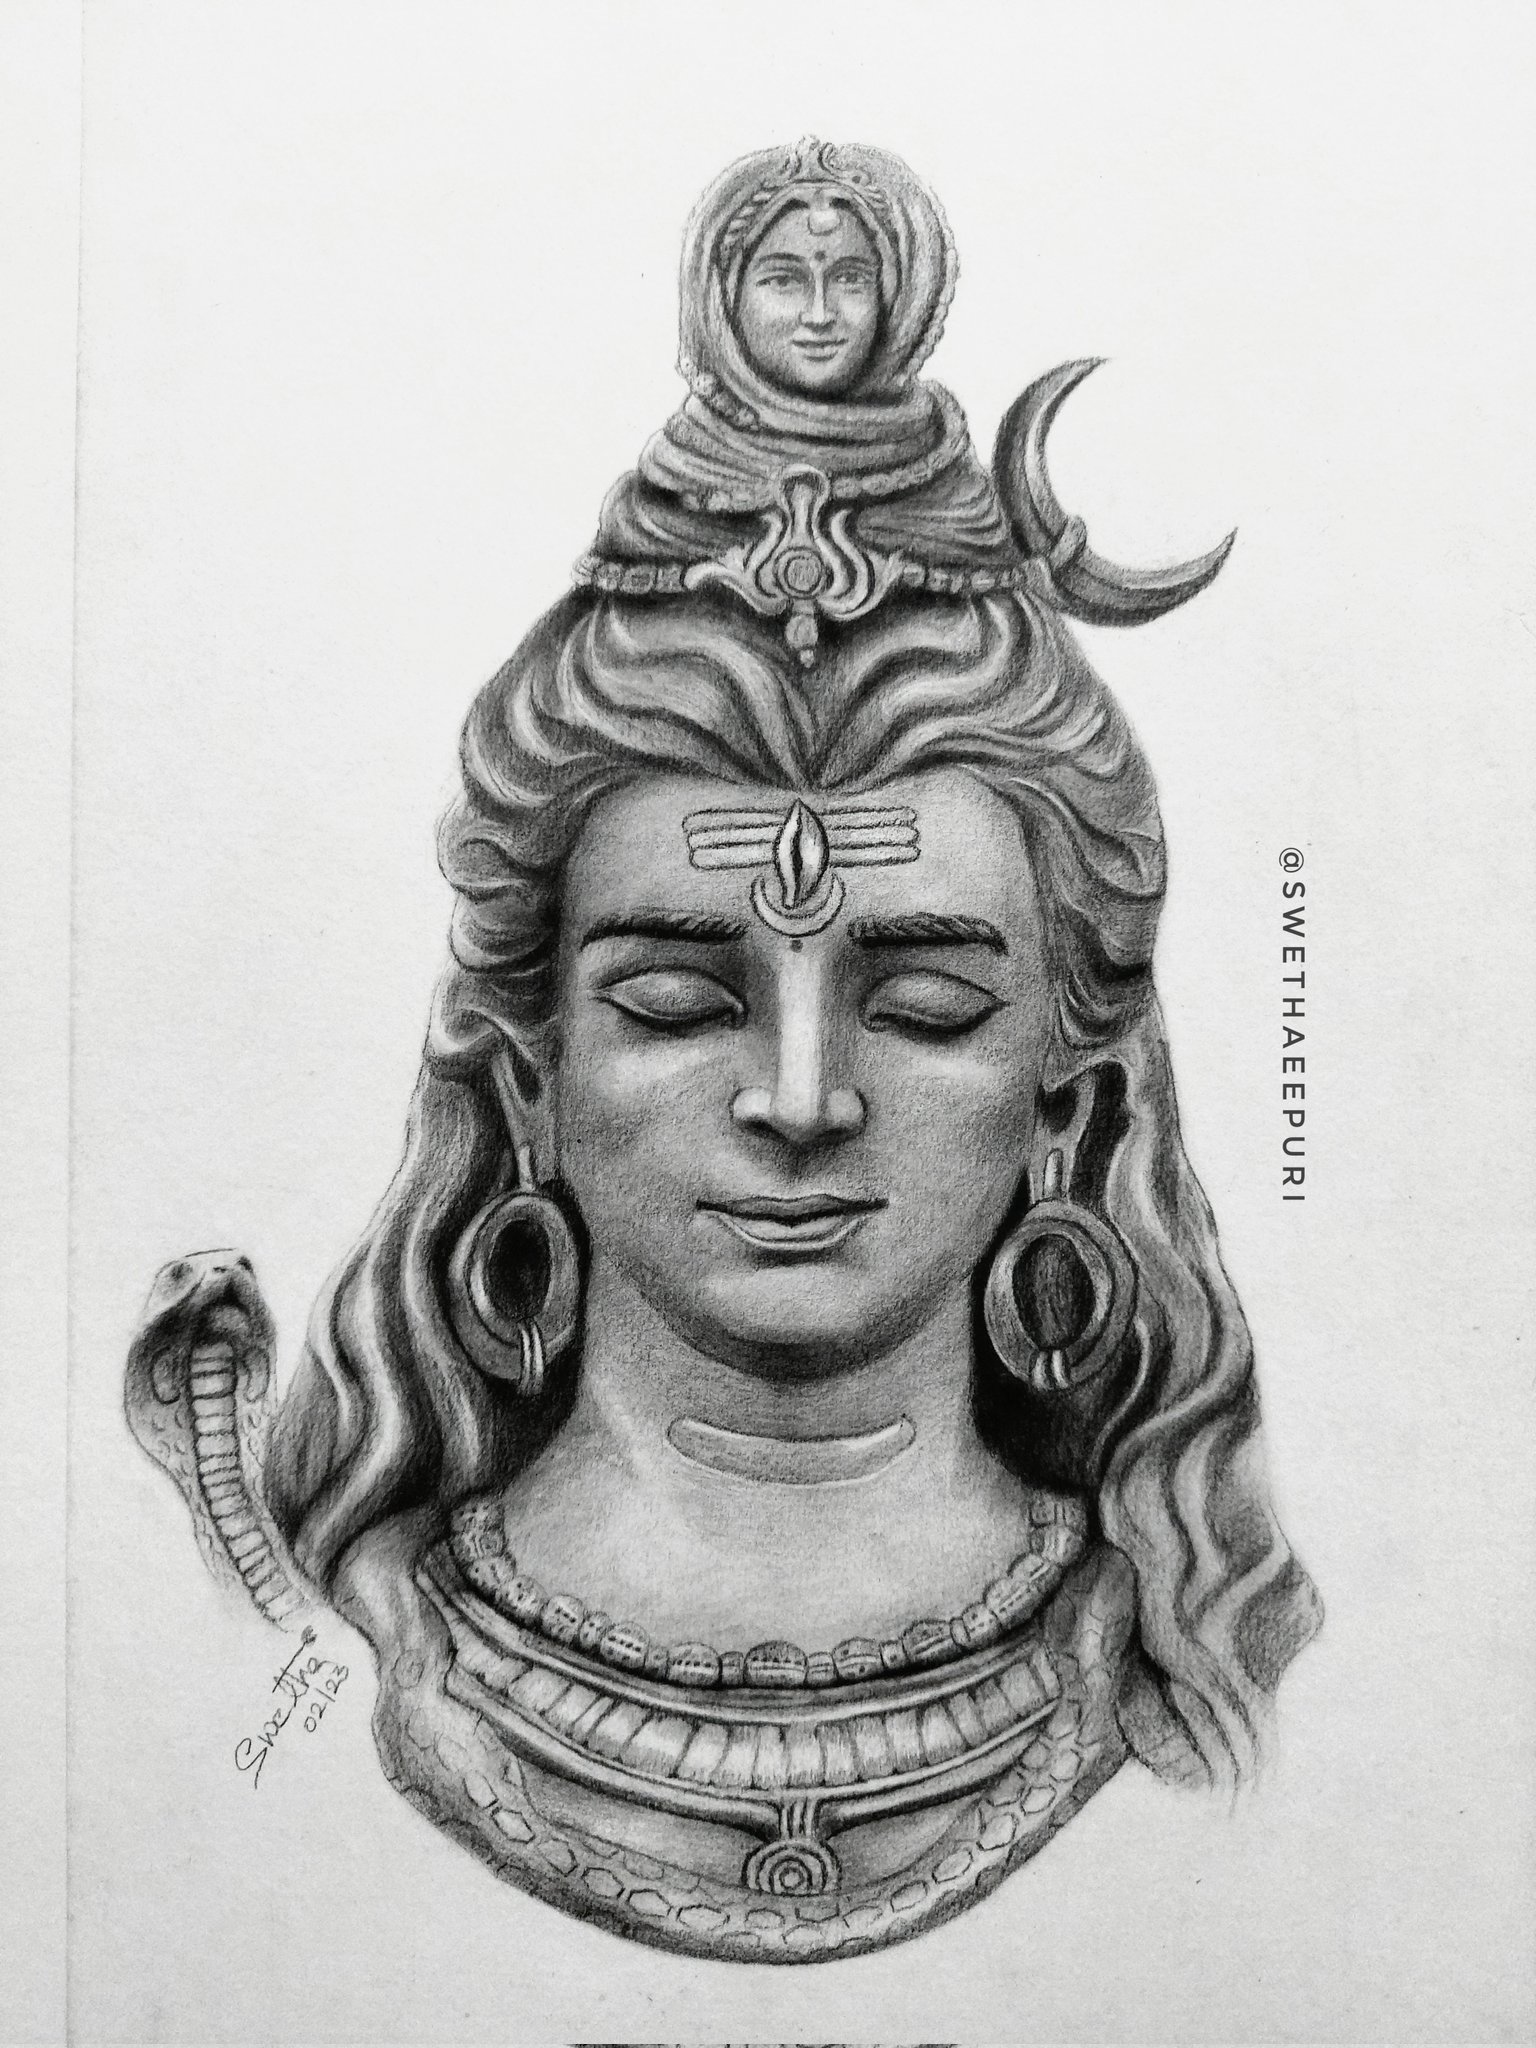 Pencil sketch of Lord Shiva - creativity post - Imgur